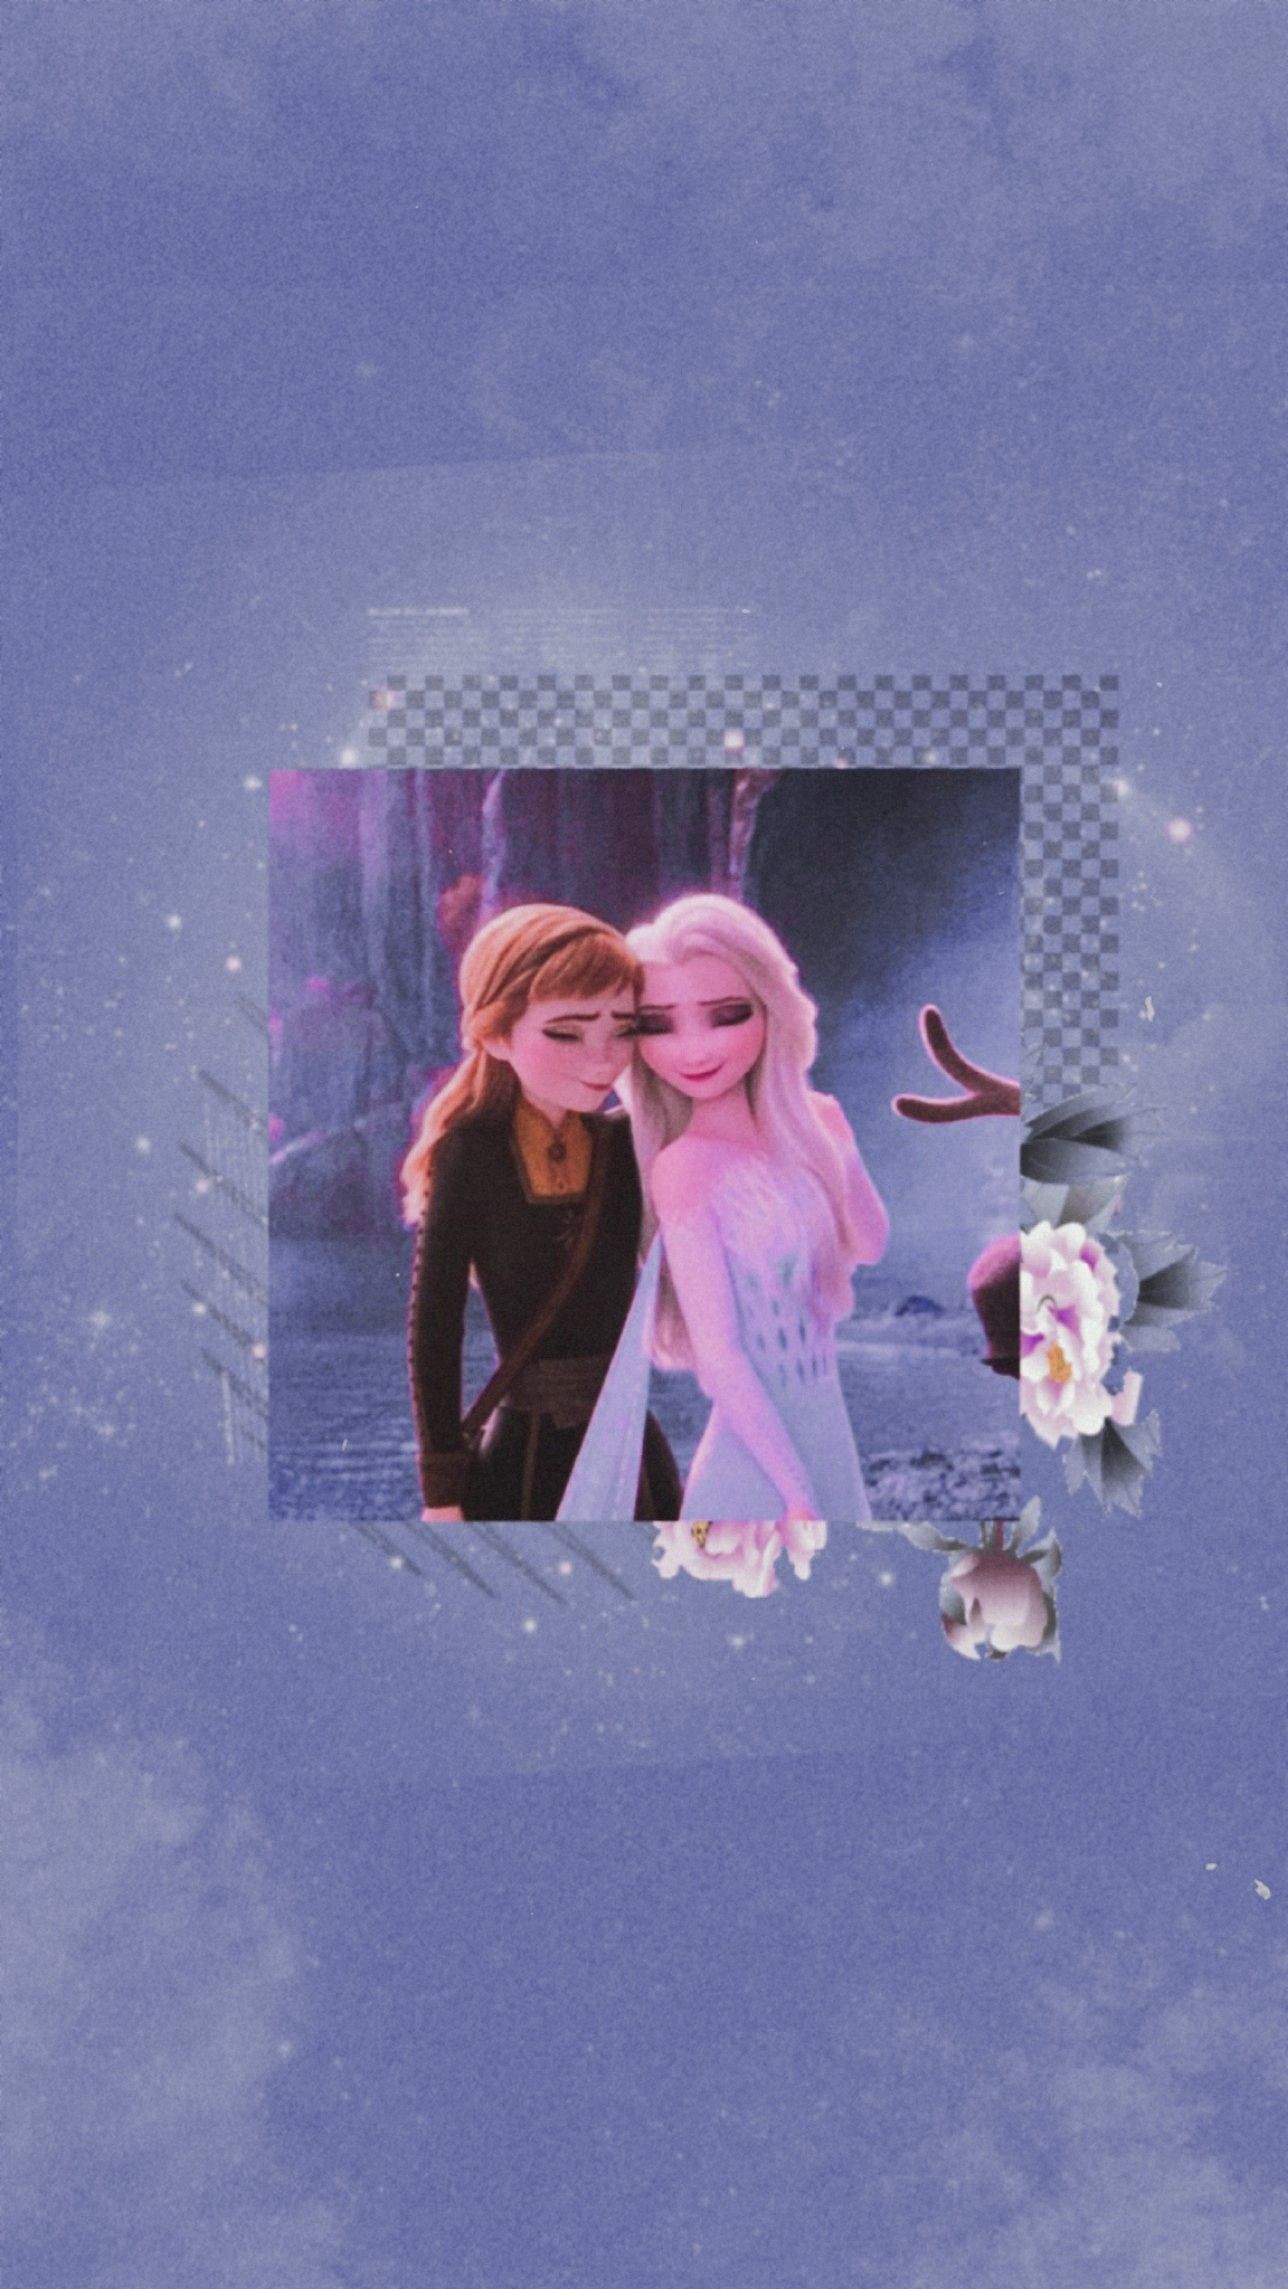 Wallpaper Lockscreen Frozen. Gambar Wajah, Putri Disney, Kartun